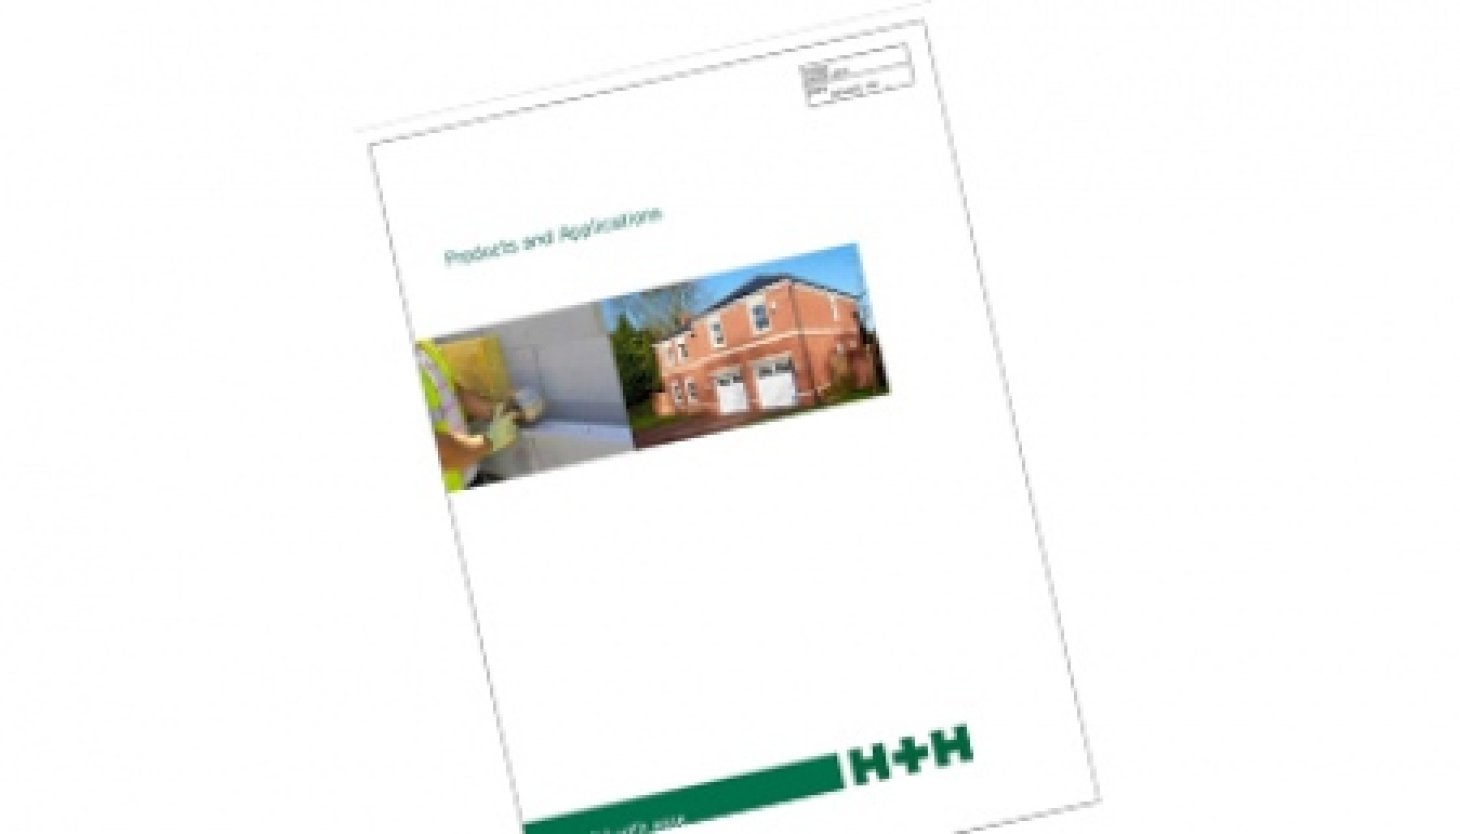 New H+H Brochure